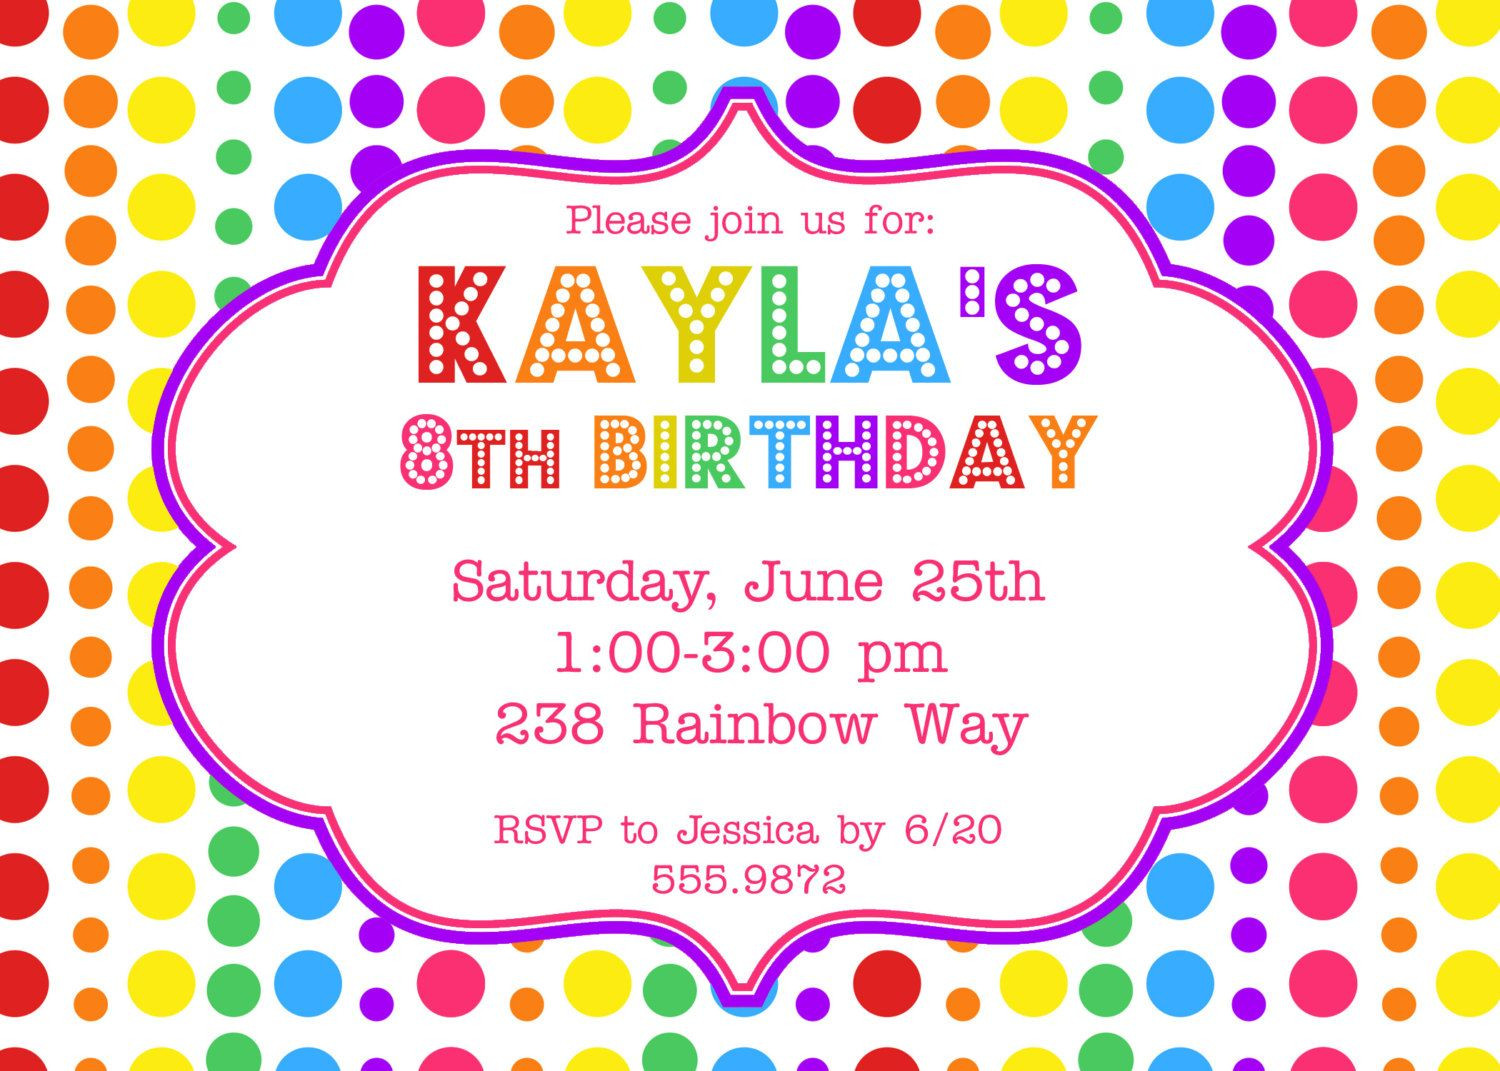 Best ideas about Birthday Invitation Ideas
. Save or Pin Rainbow Birthday Party Invitation $12 00 via Etsy Now.